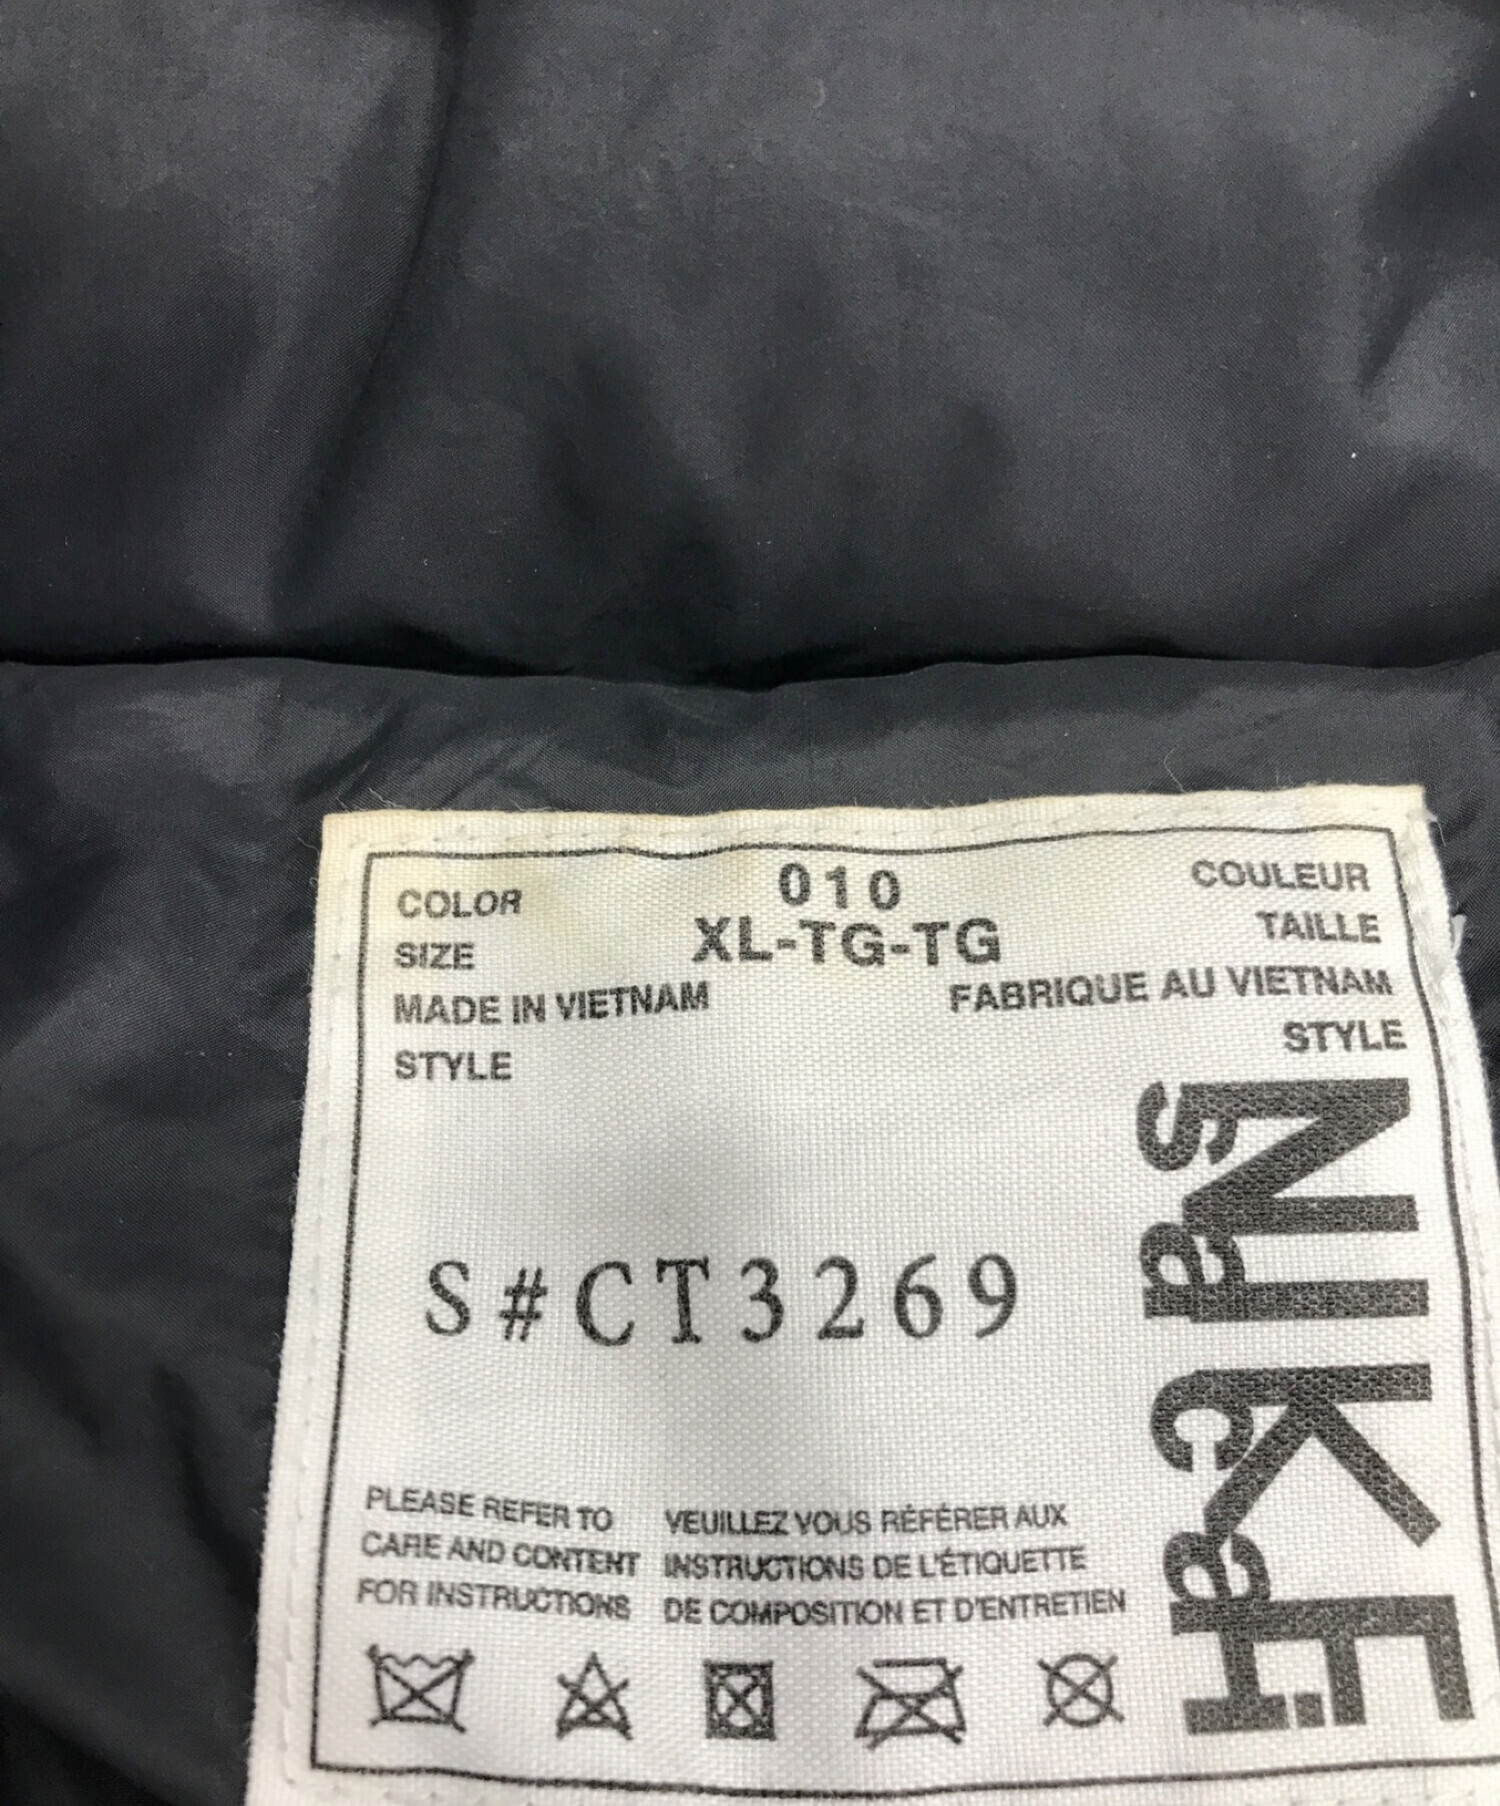 NIKE (ナイキ) sacai (サカイ) NRG PARKA ダウンジャケット ブラック サイズ:XL